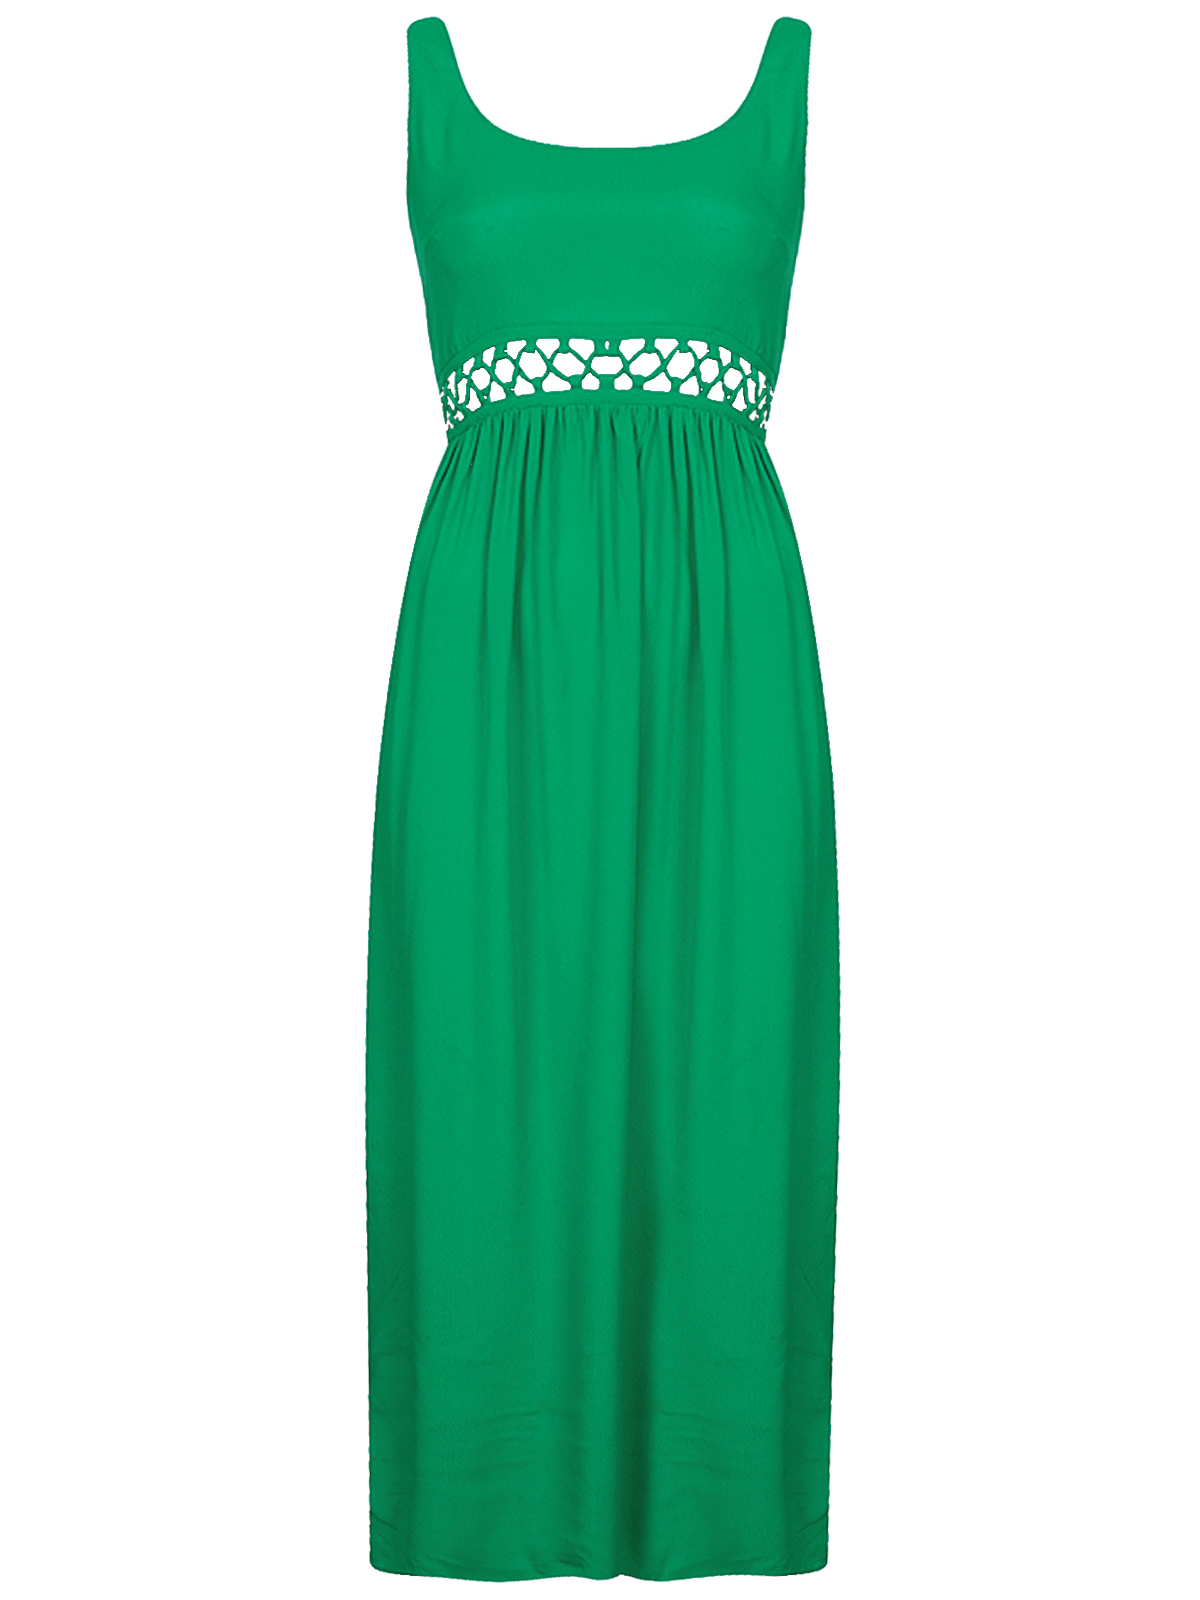 Topshop - - T0PSH0P Green Lattice Empire Line Maxi Dress - Size 6 to 12